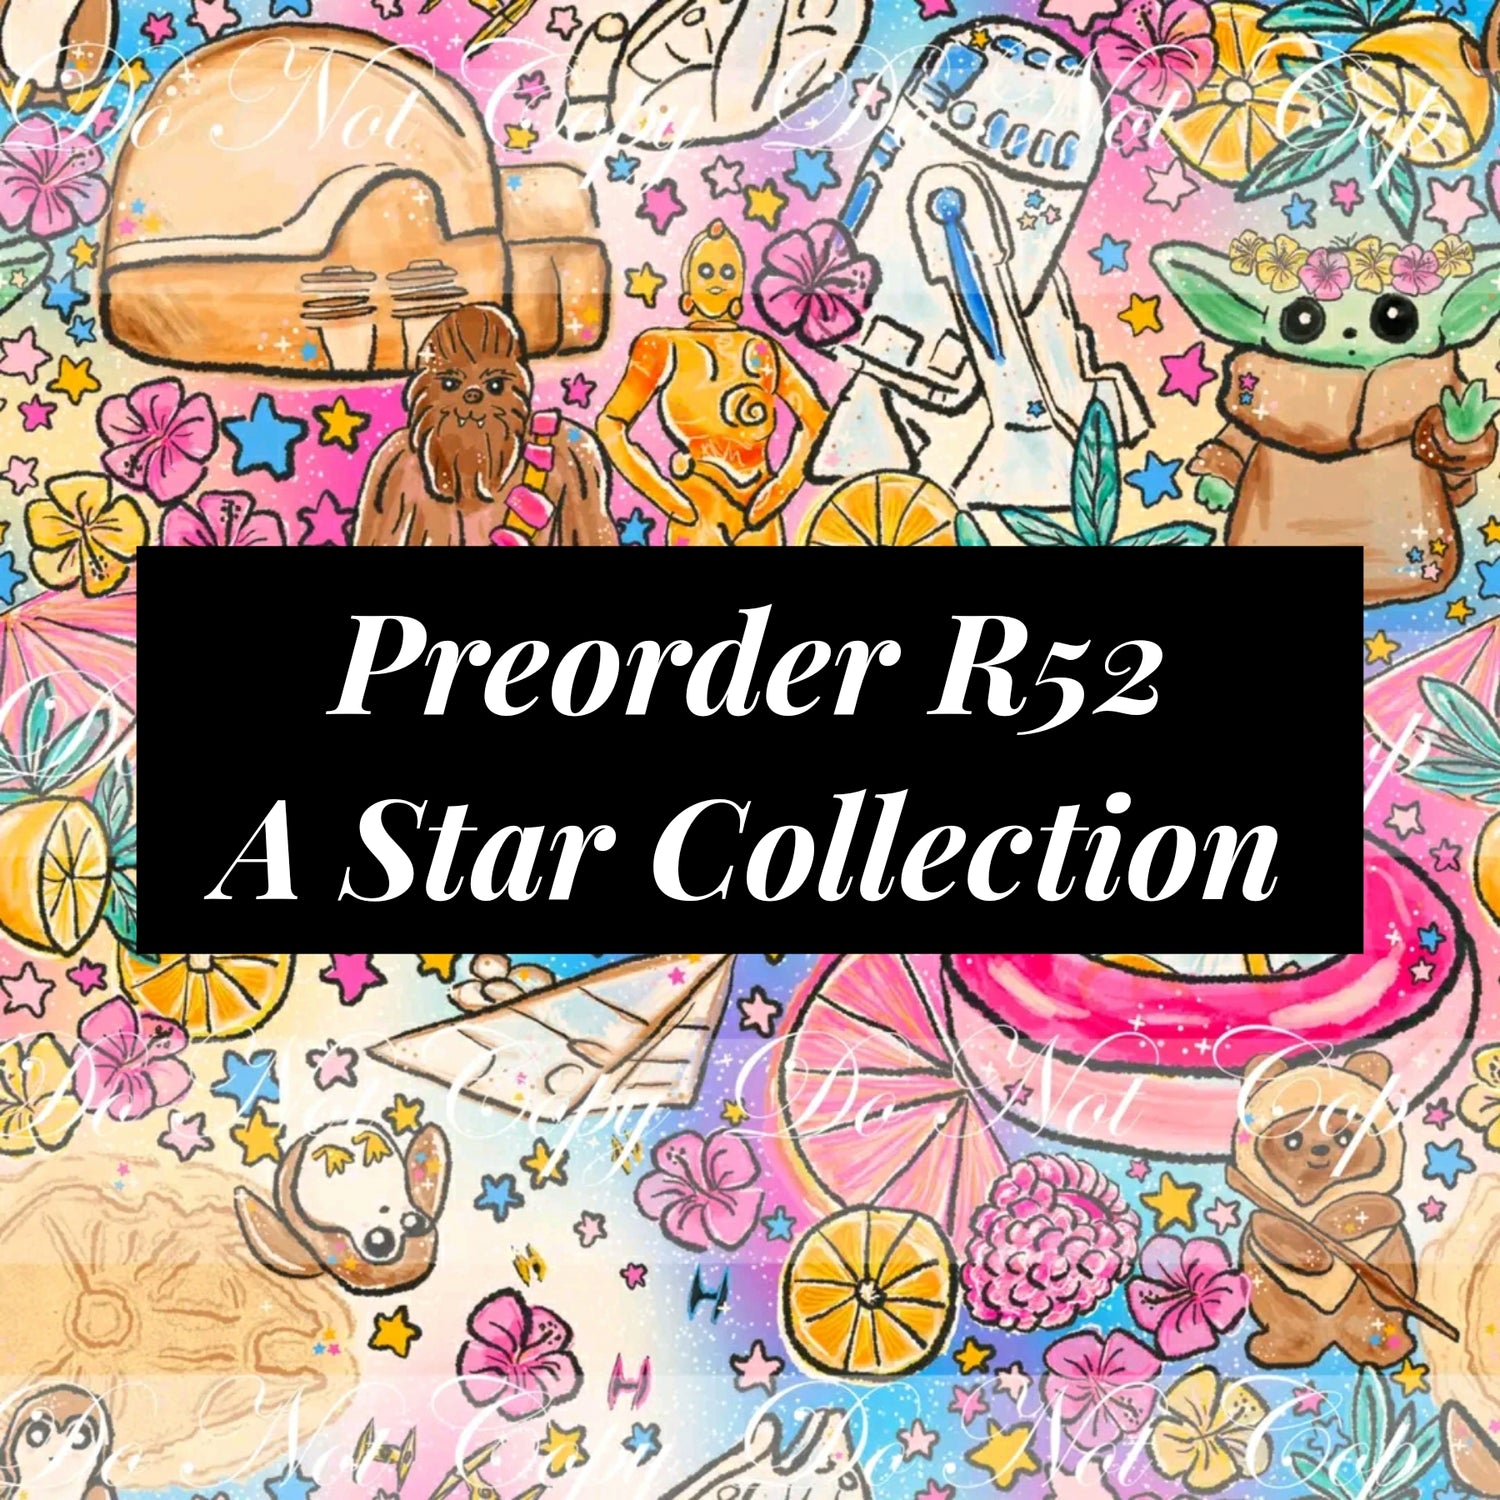 Preorder R52 A Star Collection